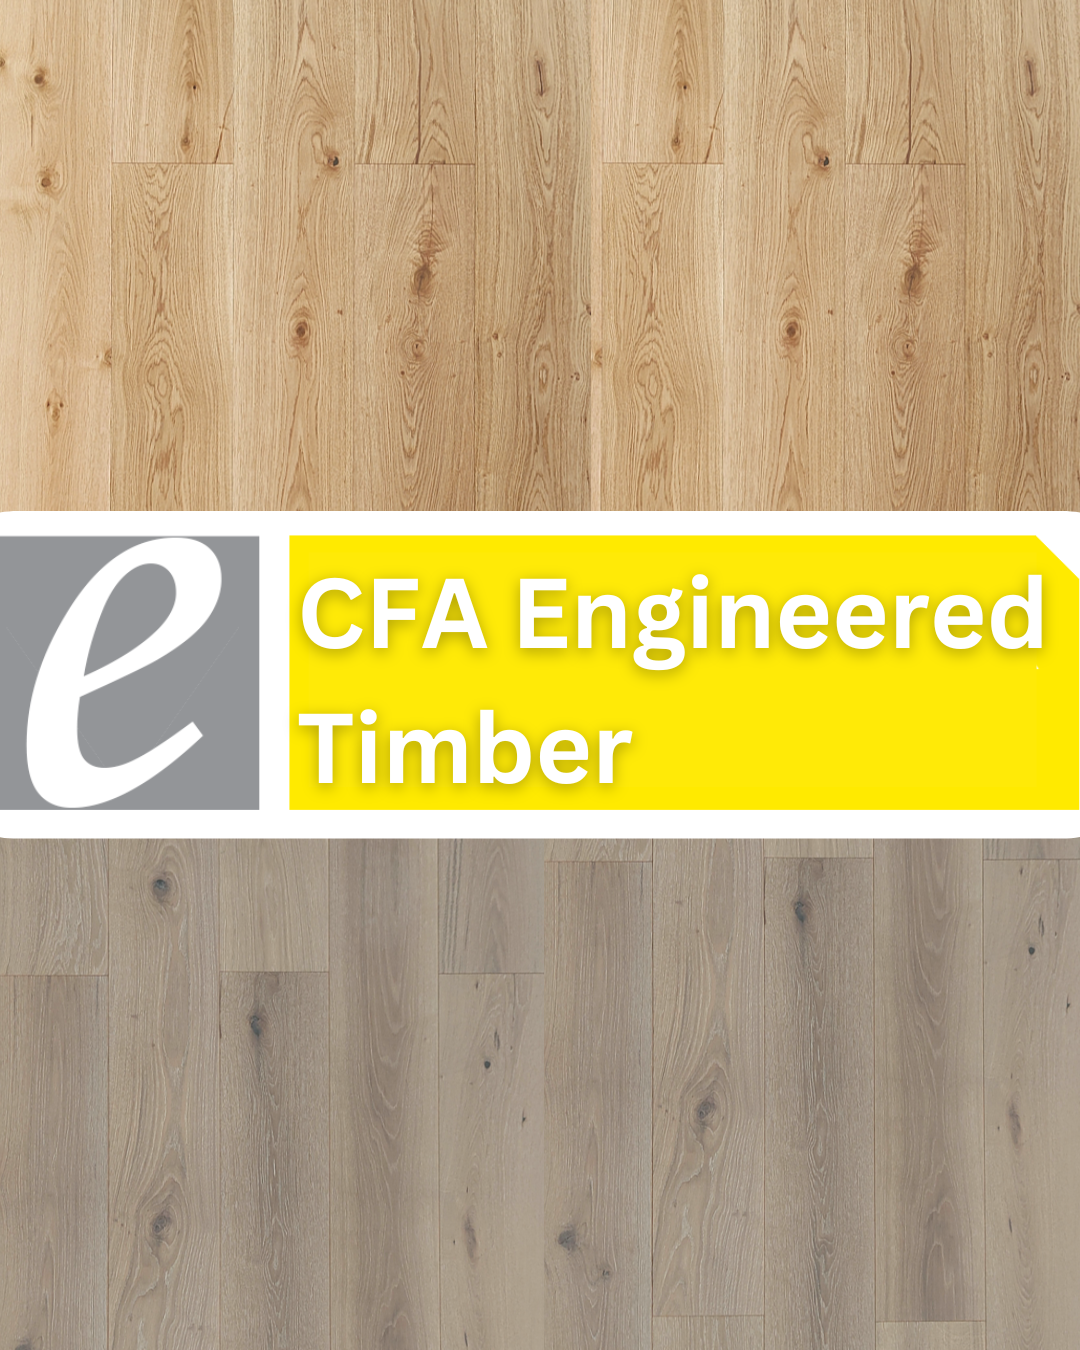 CFA Engineered Timber